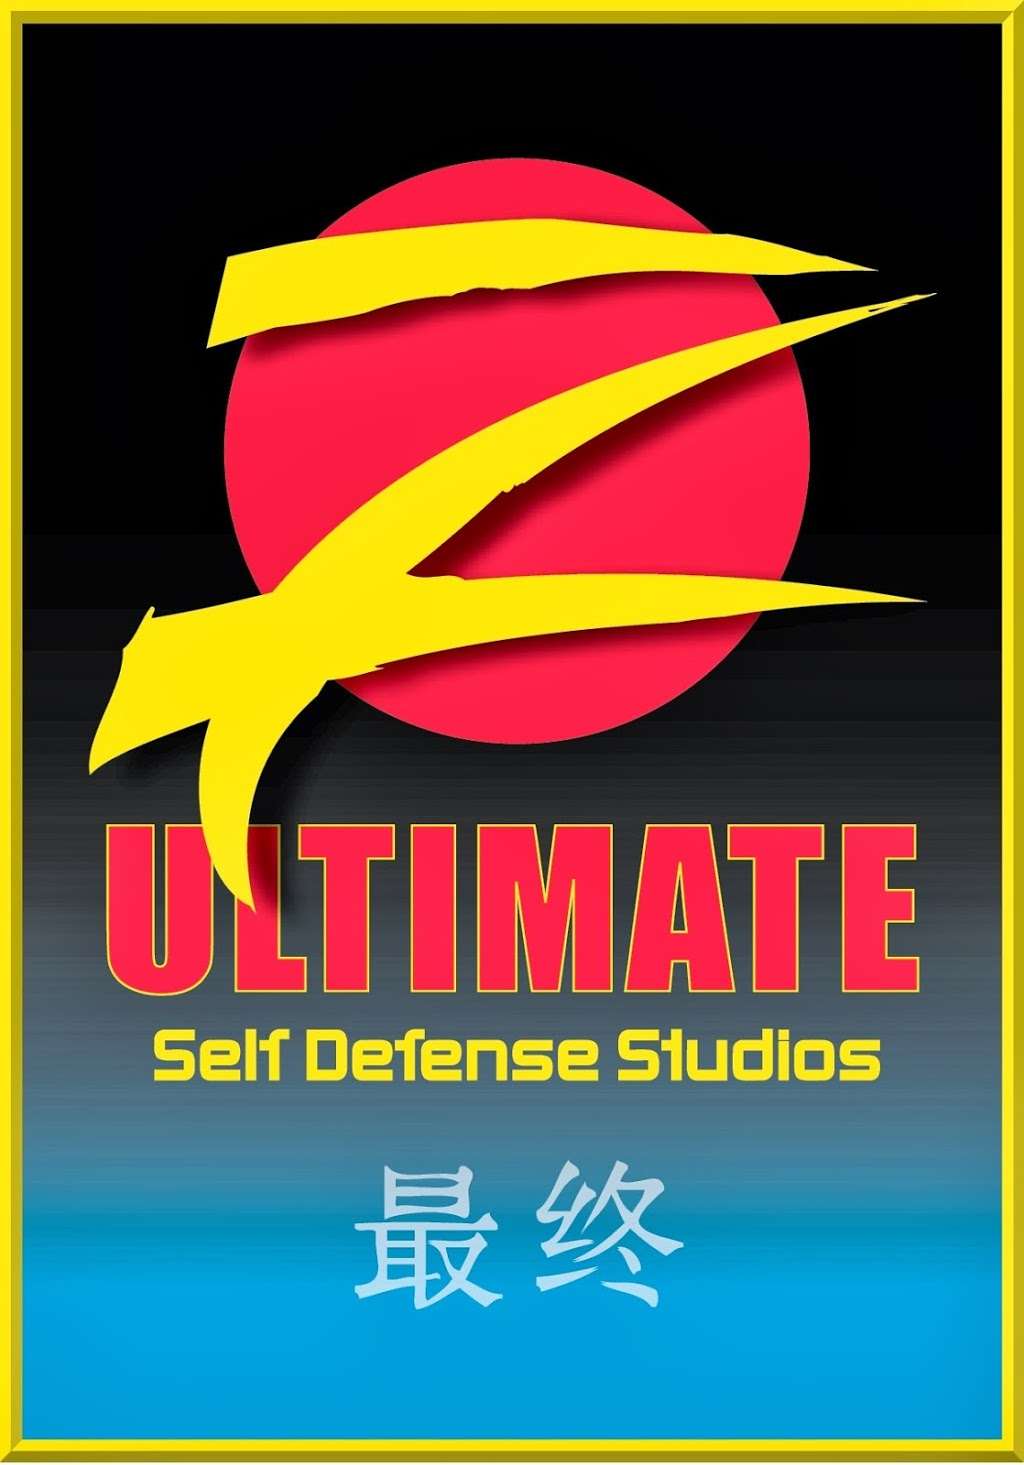 Z-Ultimate Self Defense Studios | 1809 Waukegan Rd, Glenview, IL 60025, USA | Phone: (224) 616-2558